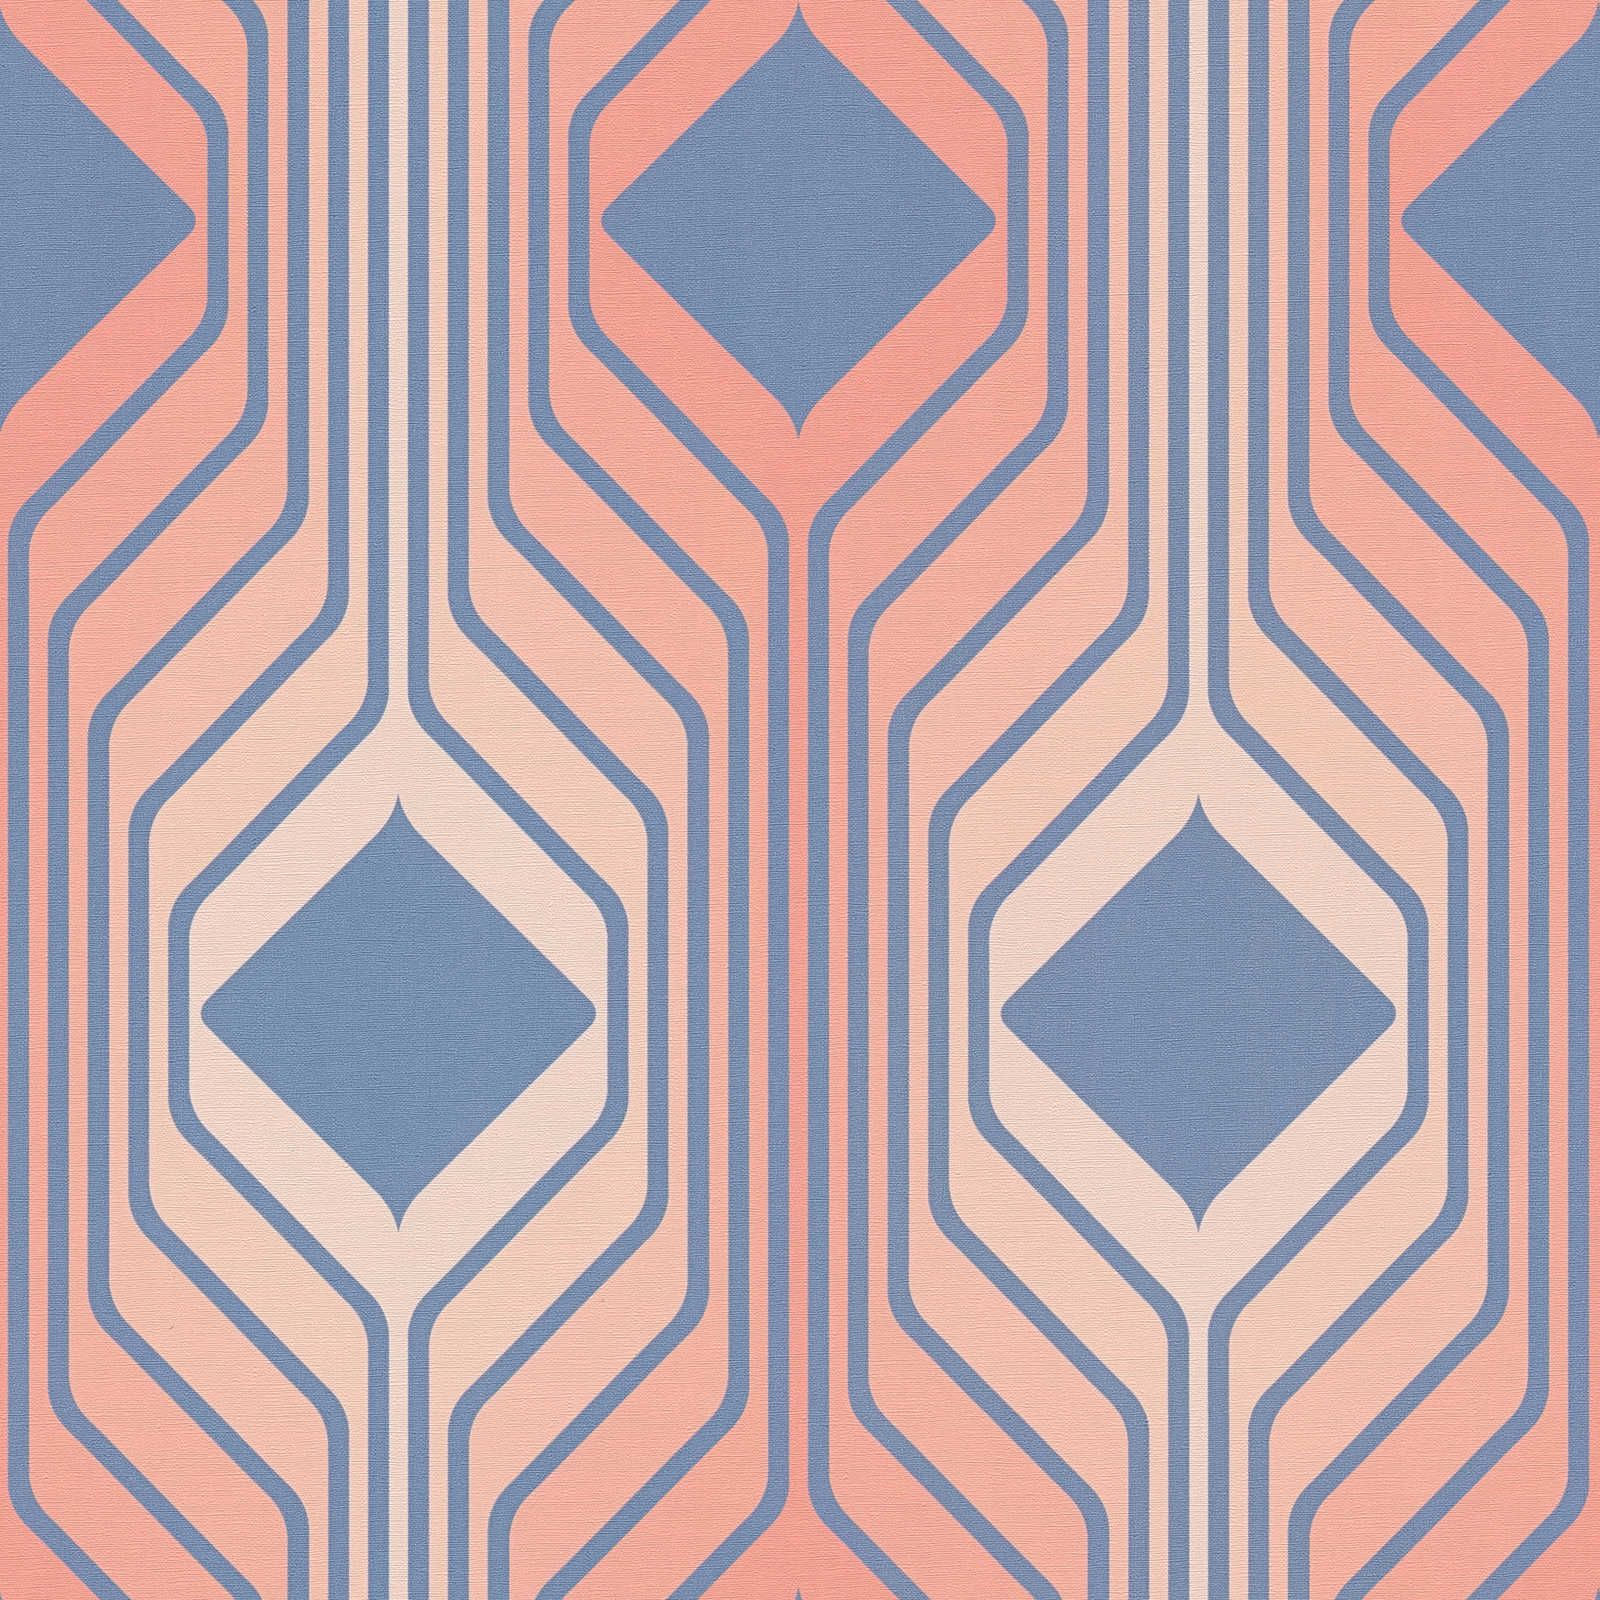 Abstract Ruitpatroon in Retrostijl - Blauw, Rood, Roze
